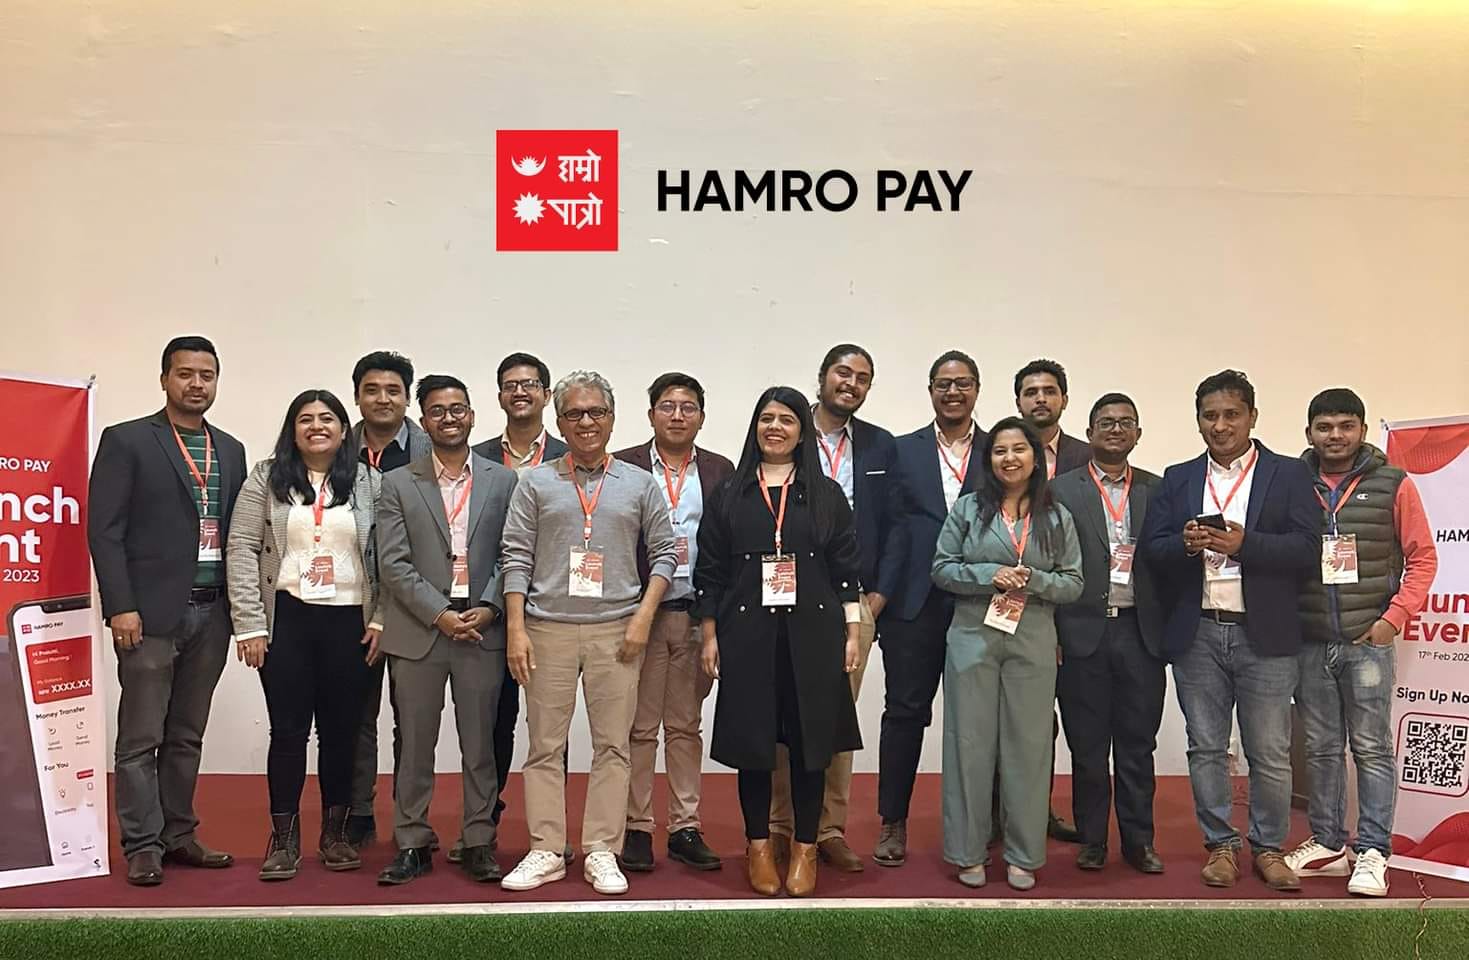 Hamro Pay Launch - Group Photo